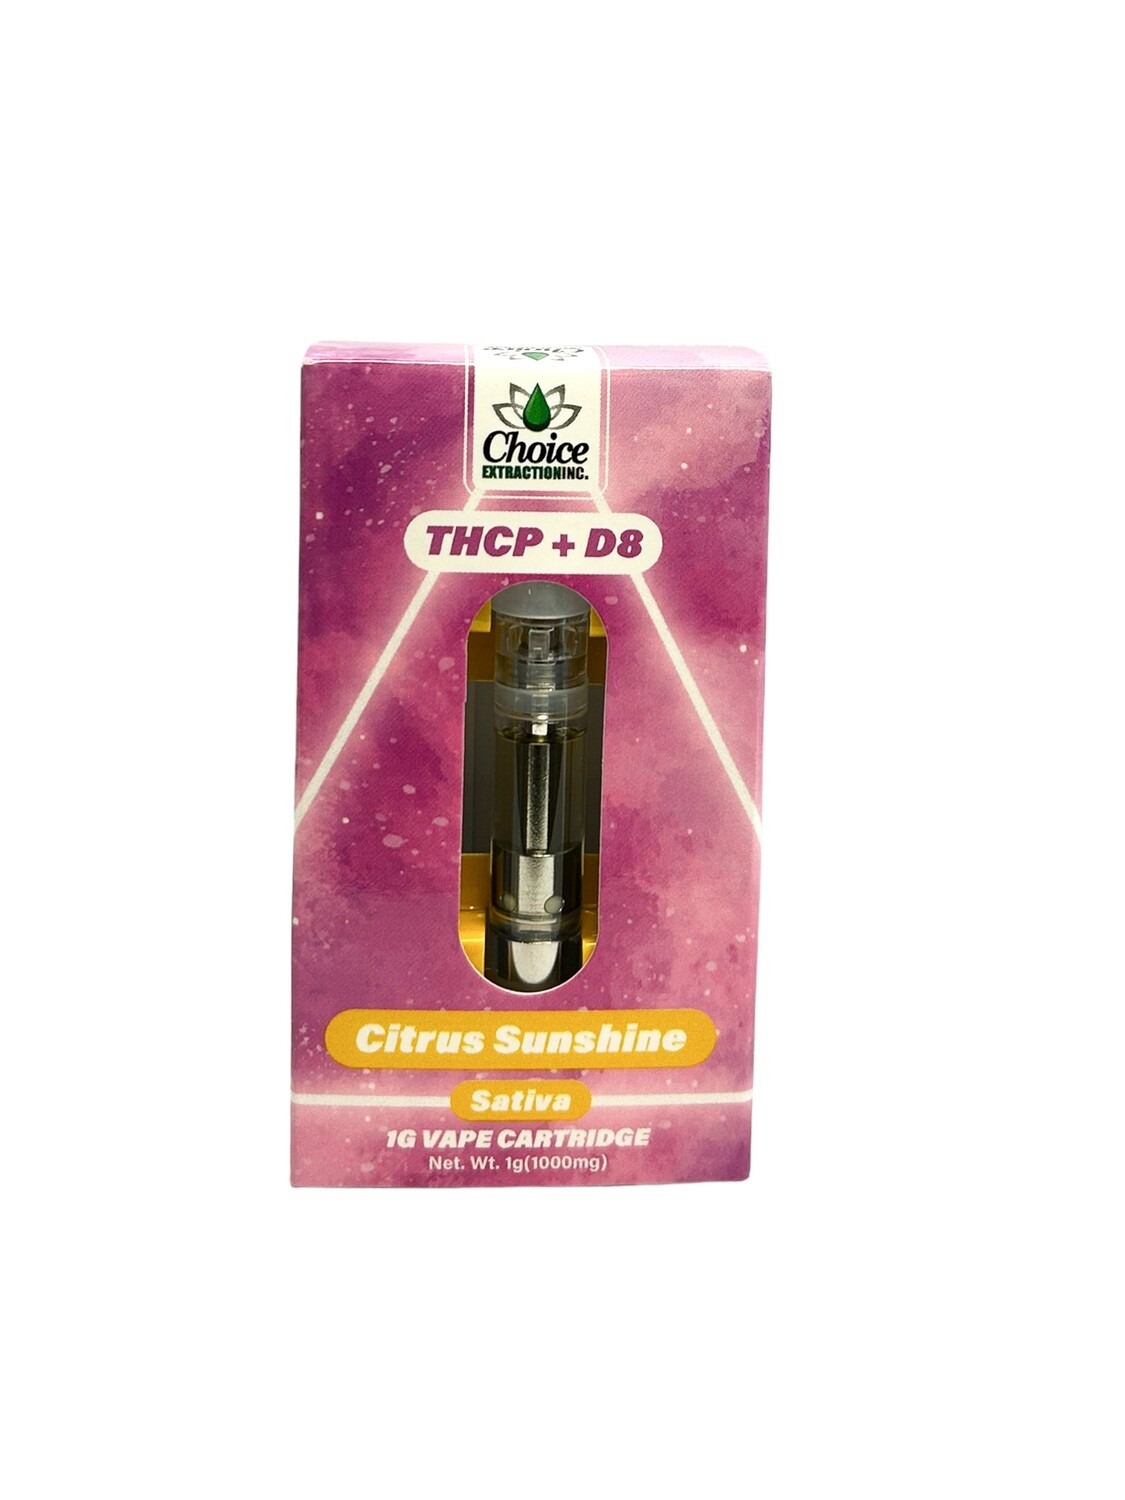 THCP + D8 Vape Cart - Citrus Sunshine1mL - Sativa